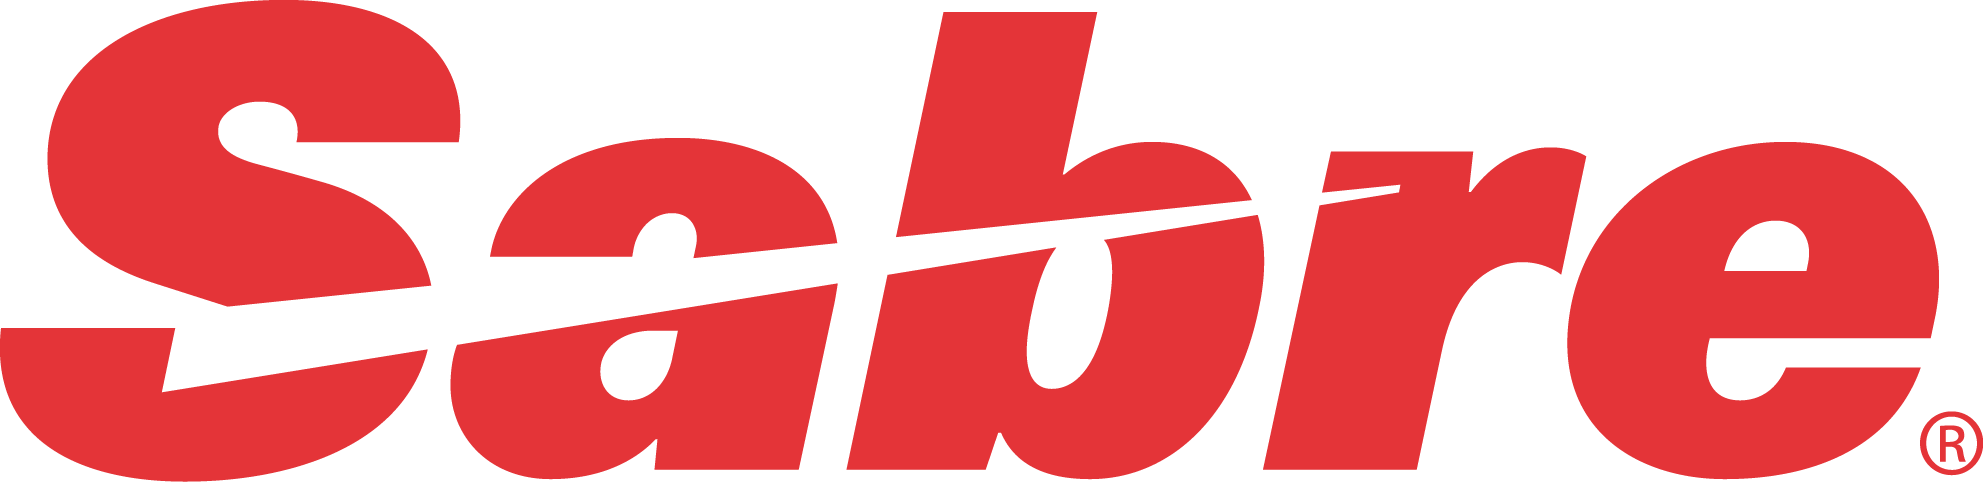 Sabre Logo png